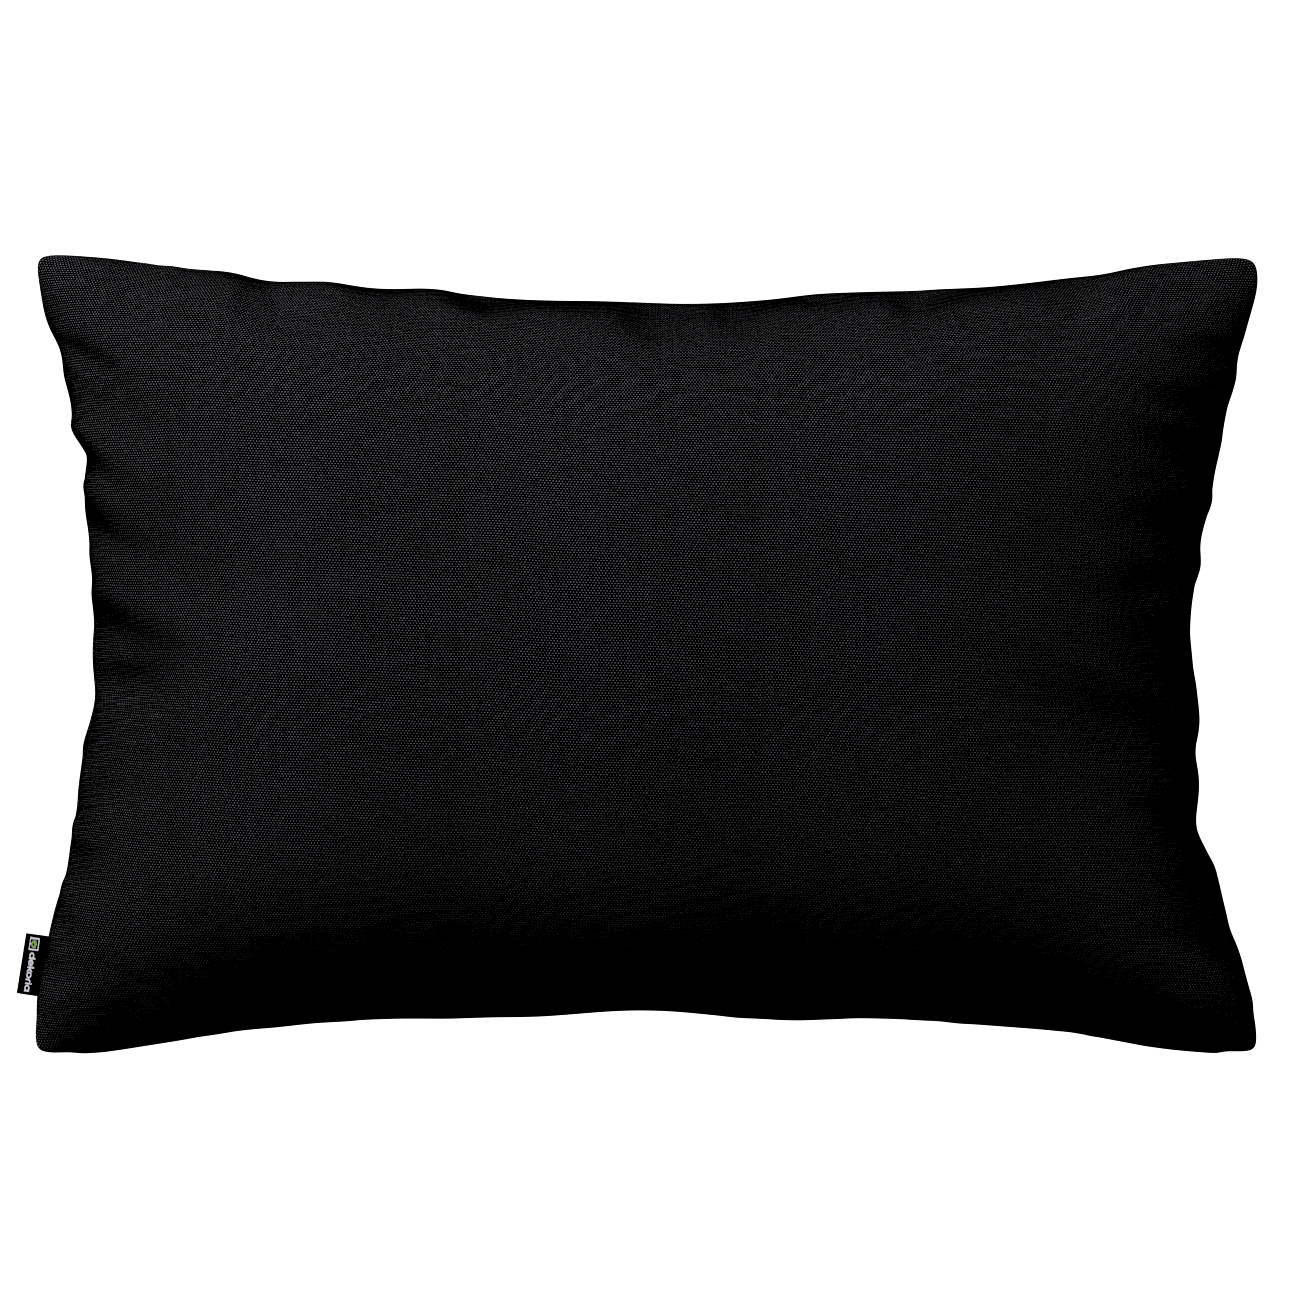 Kissenhülle Kinga rechteckig, schwarz, 47 x 28 cm, Etna (705-00) günstig online kaufen